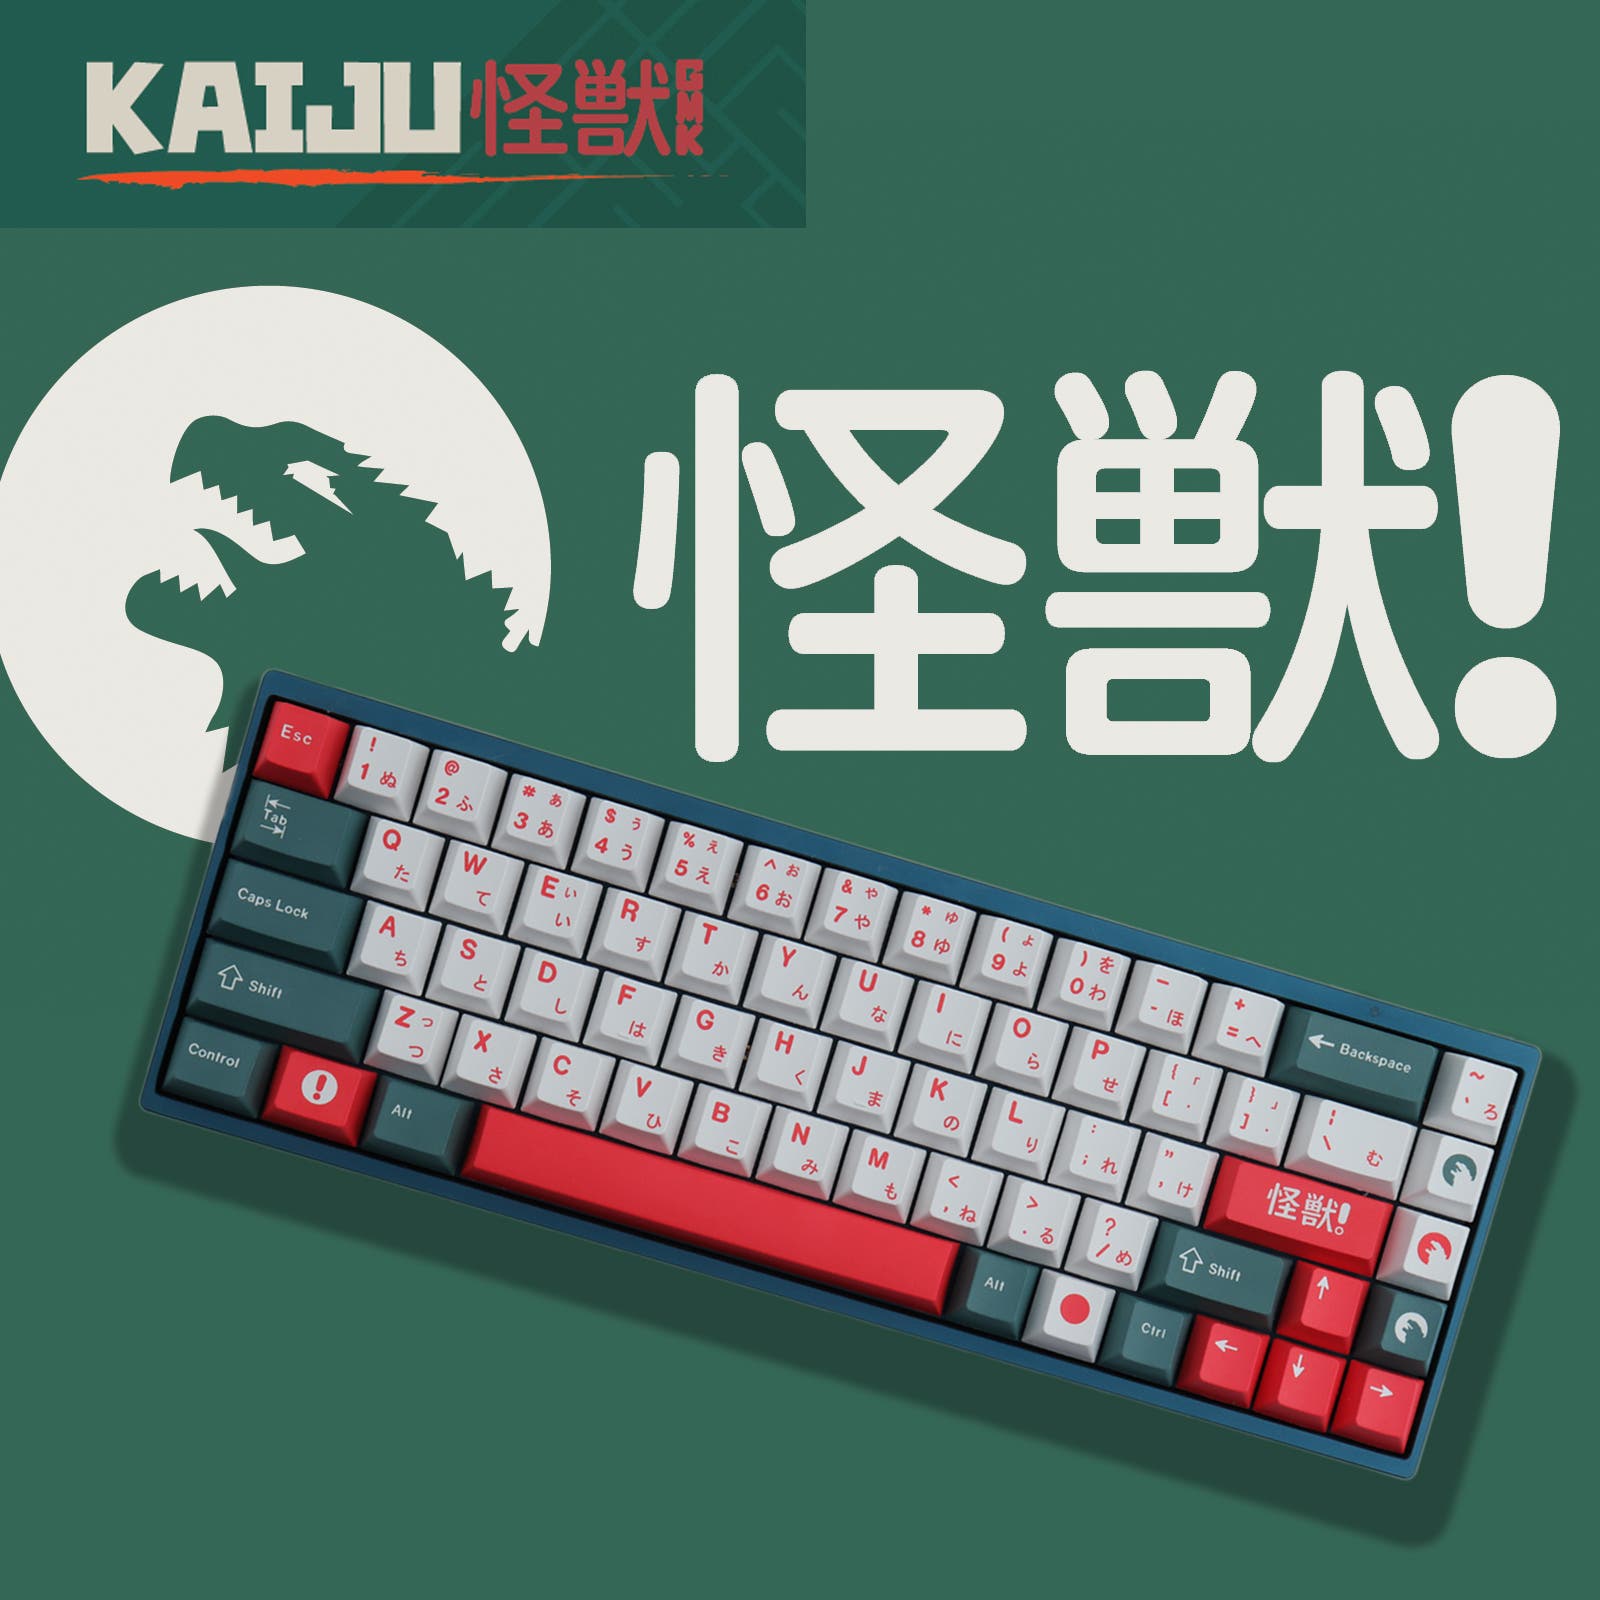 Kaiju keycaps